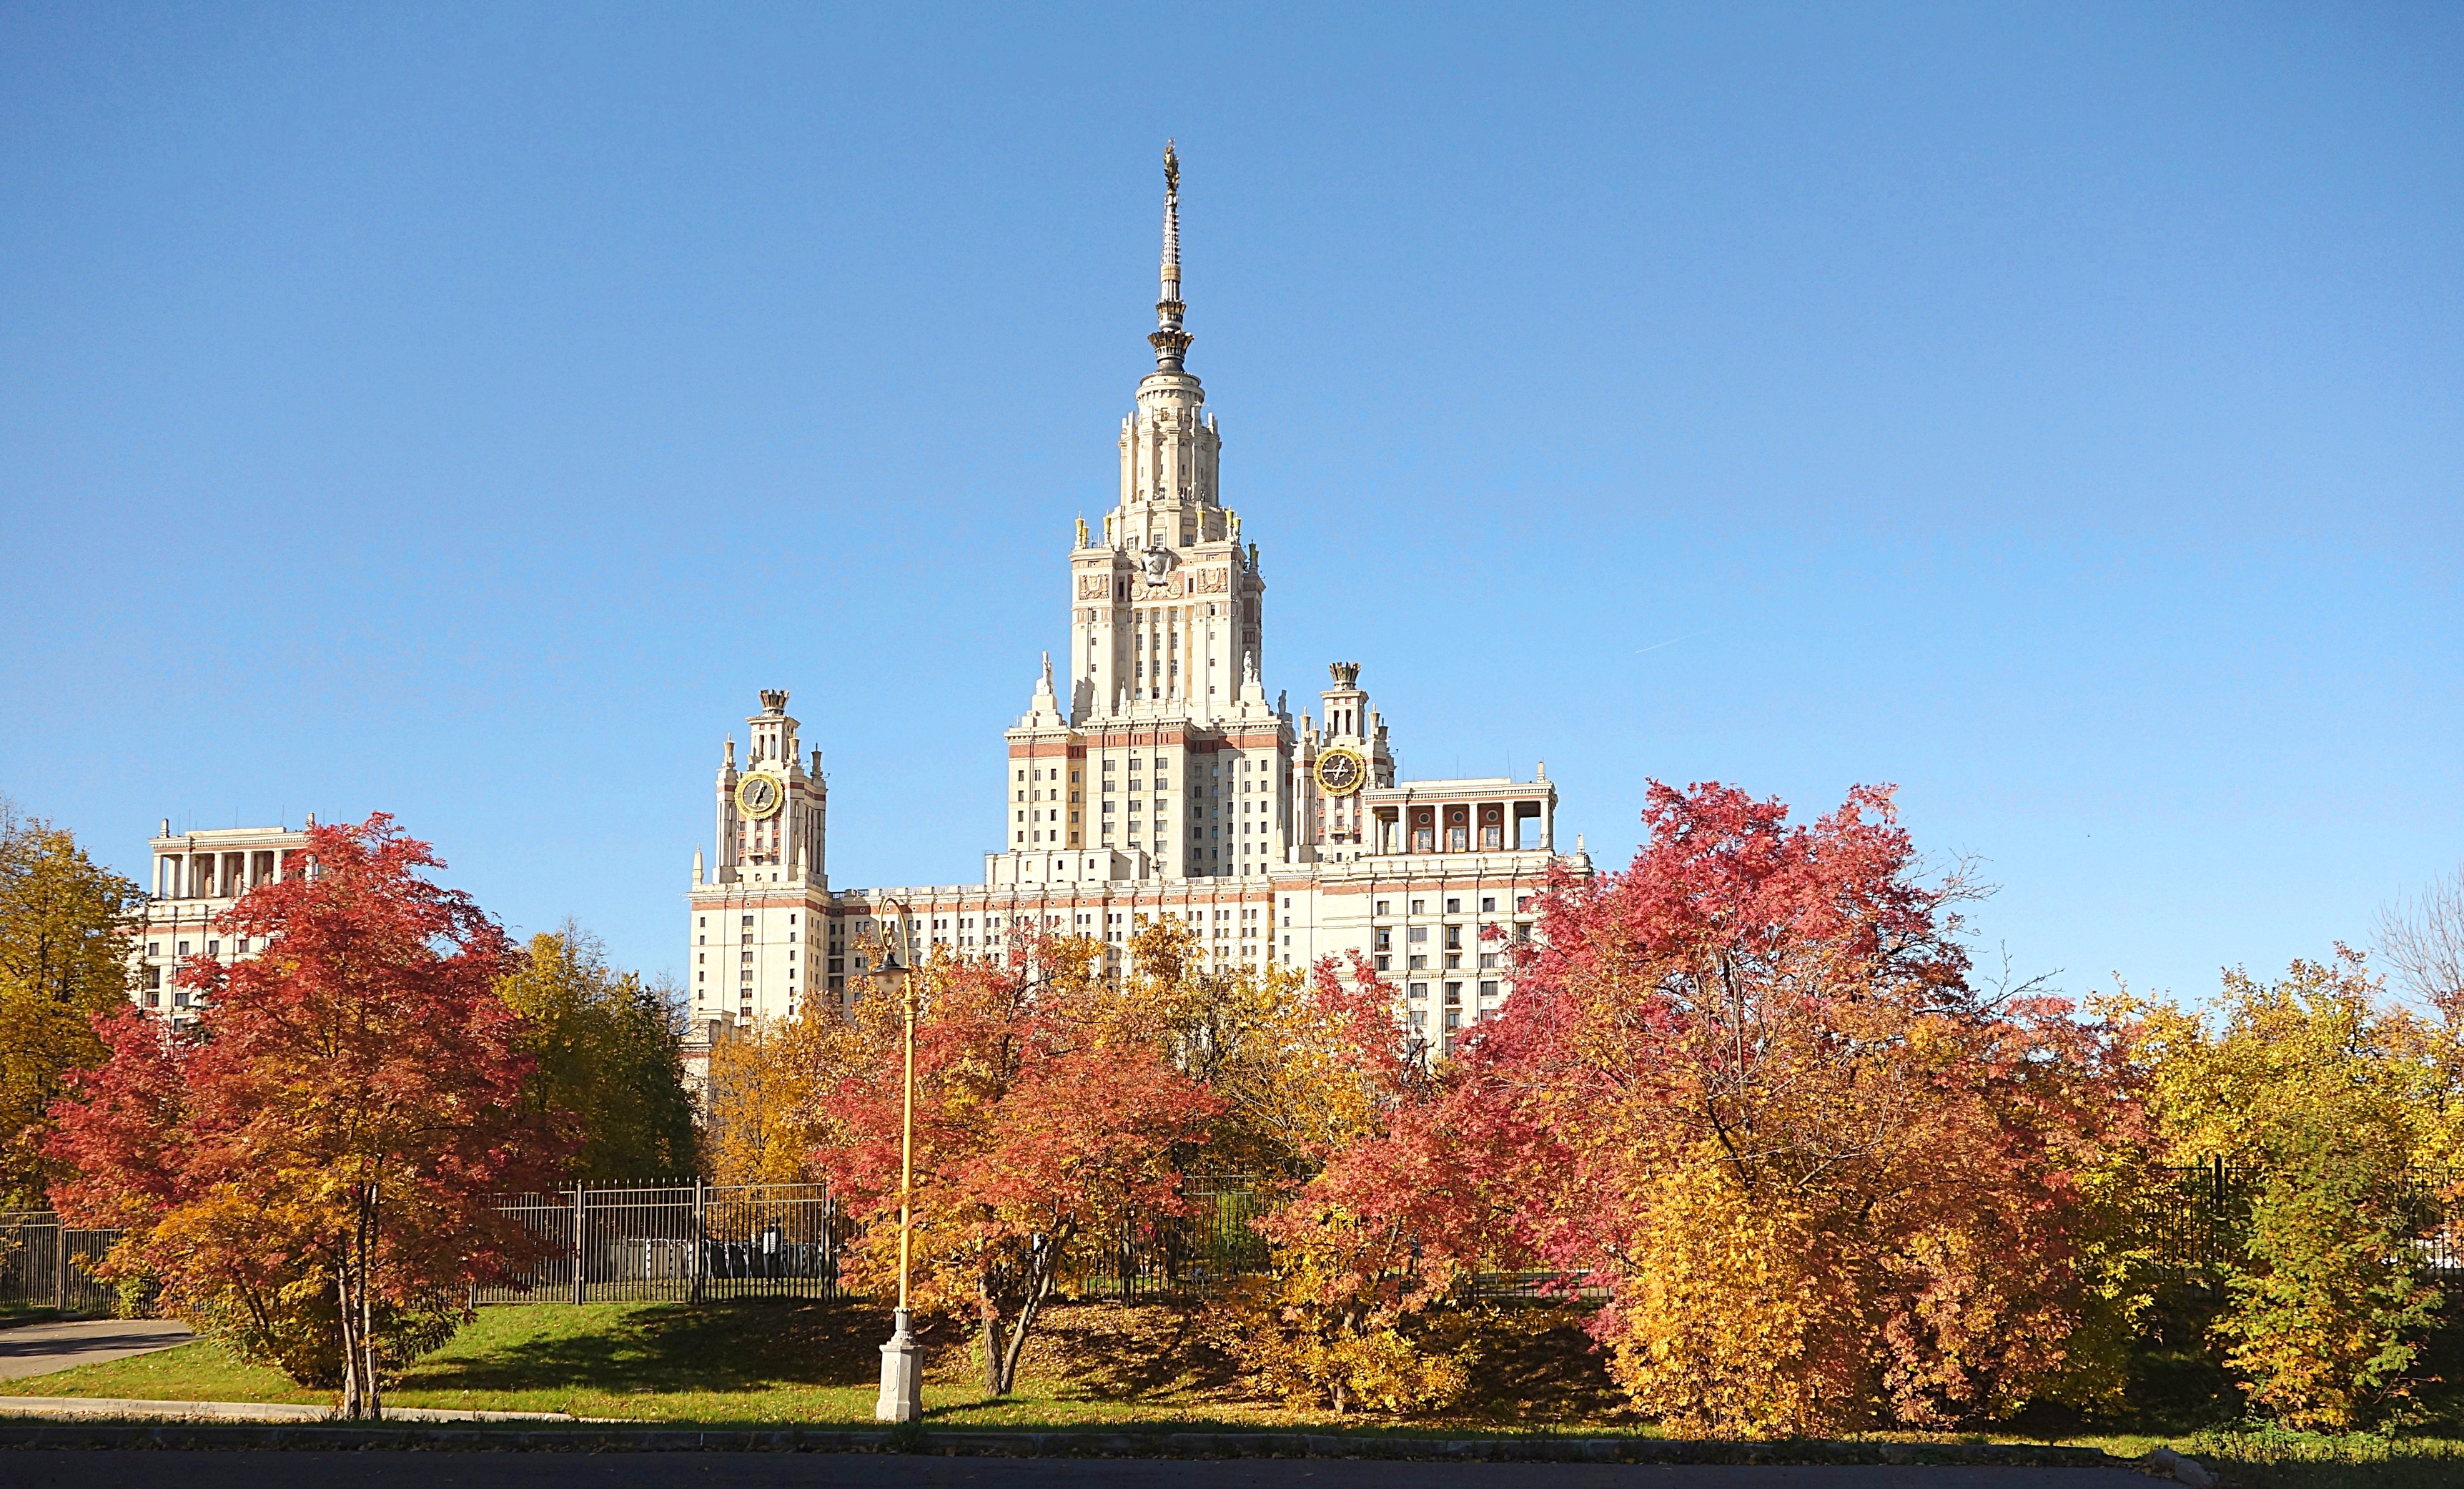 Здание МГУ в октябре 2018 г. Фото Морошкина В.В.